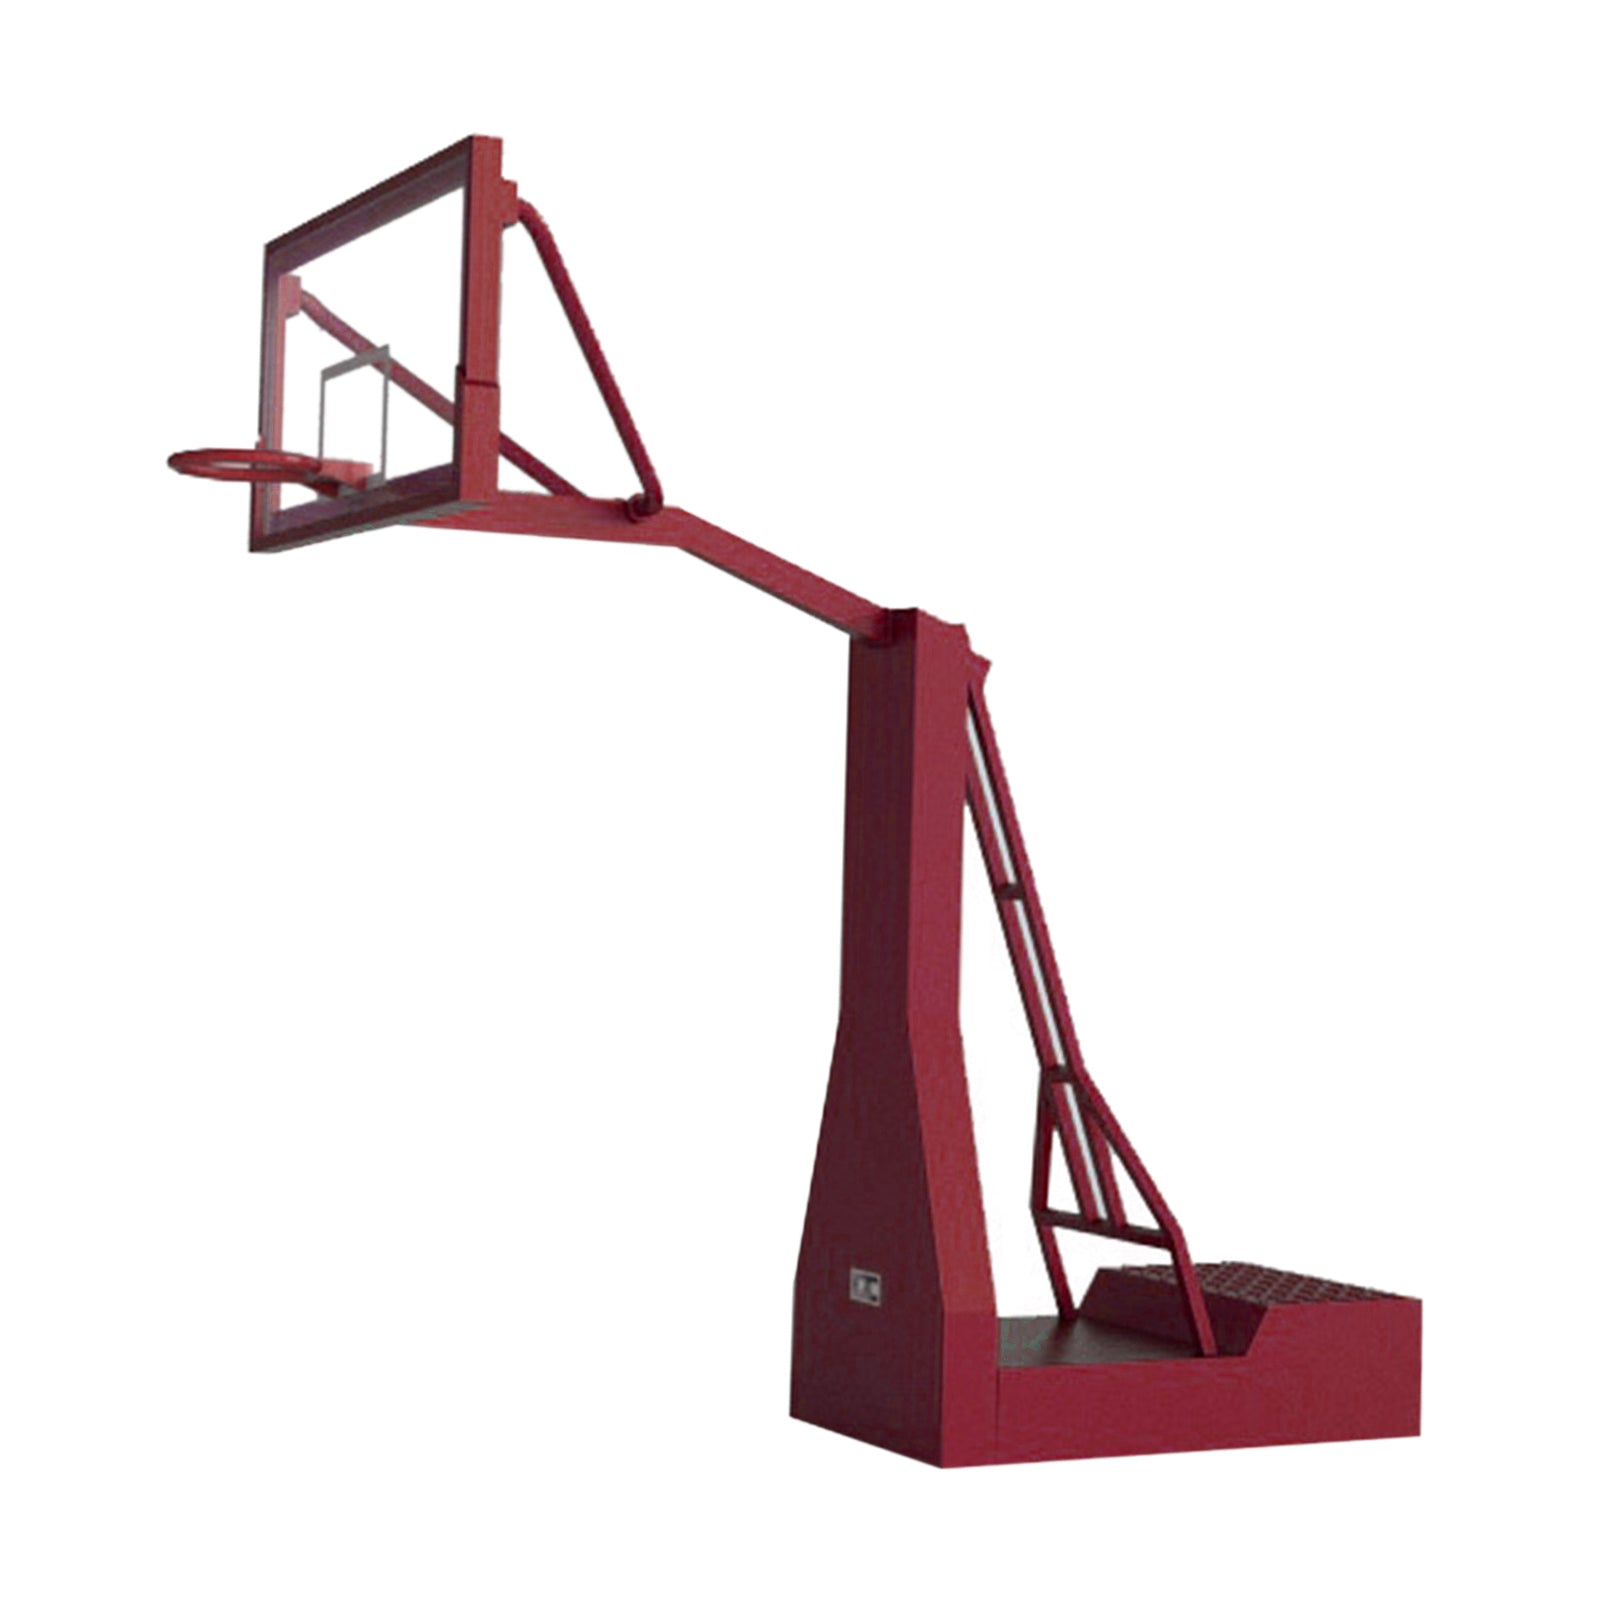 1/32 Plastic Basketball Hoop Model for Action Figures Scene Props Red